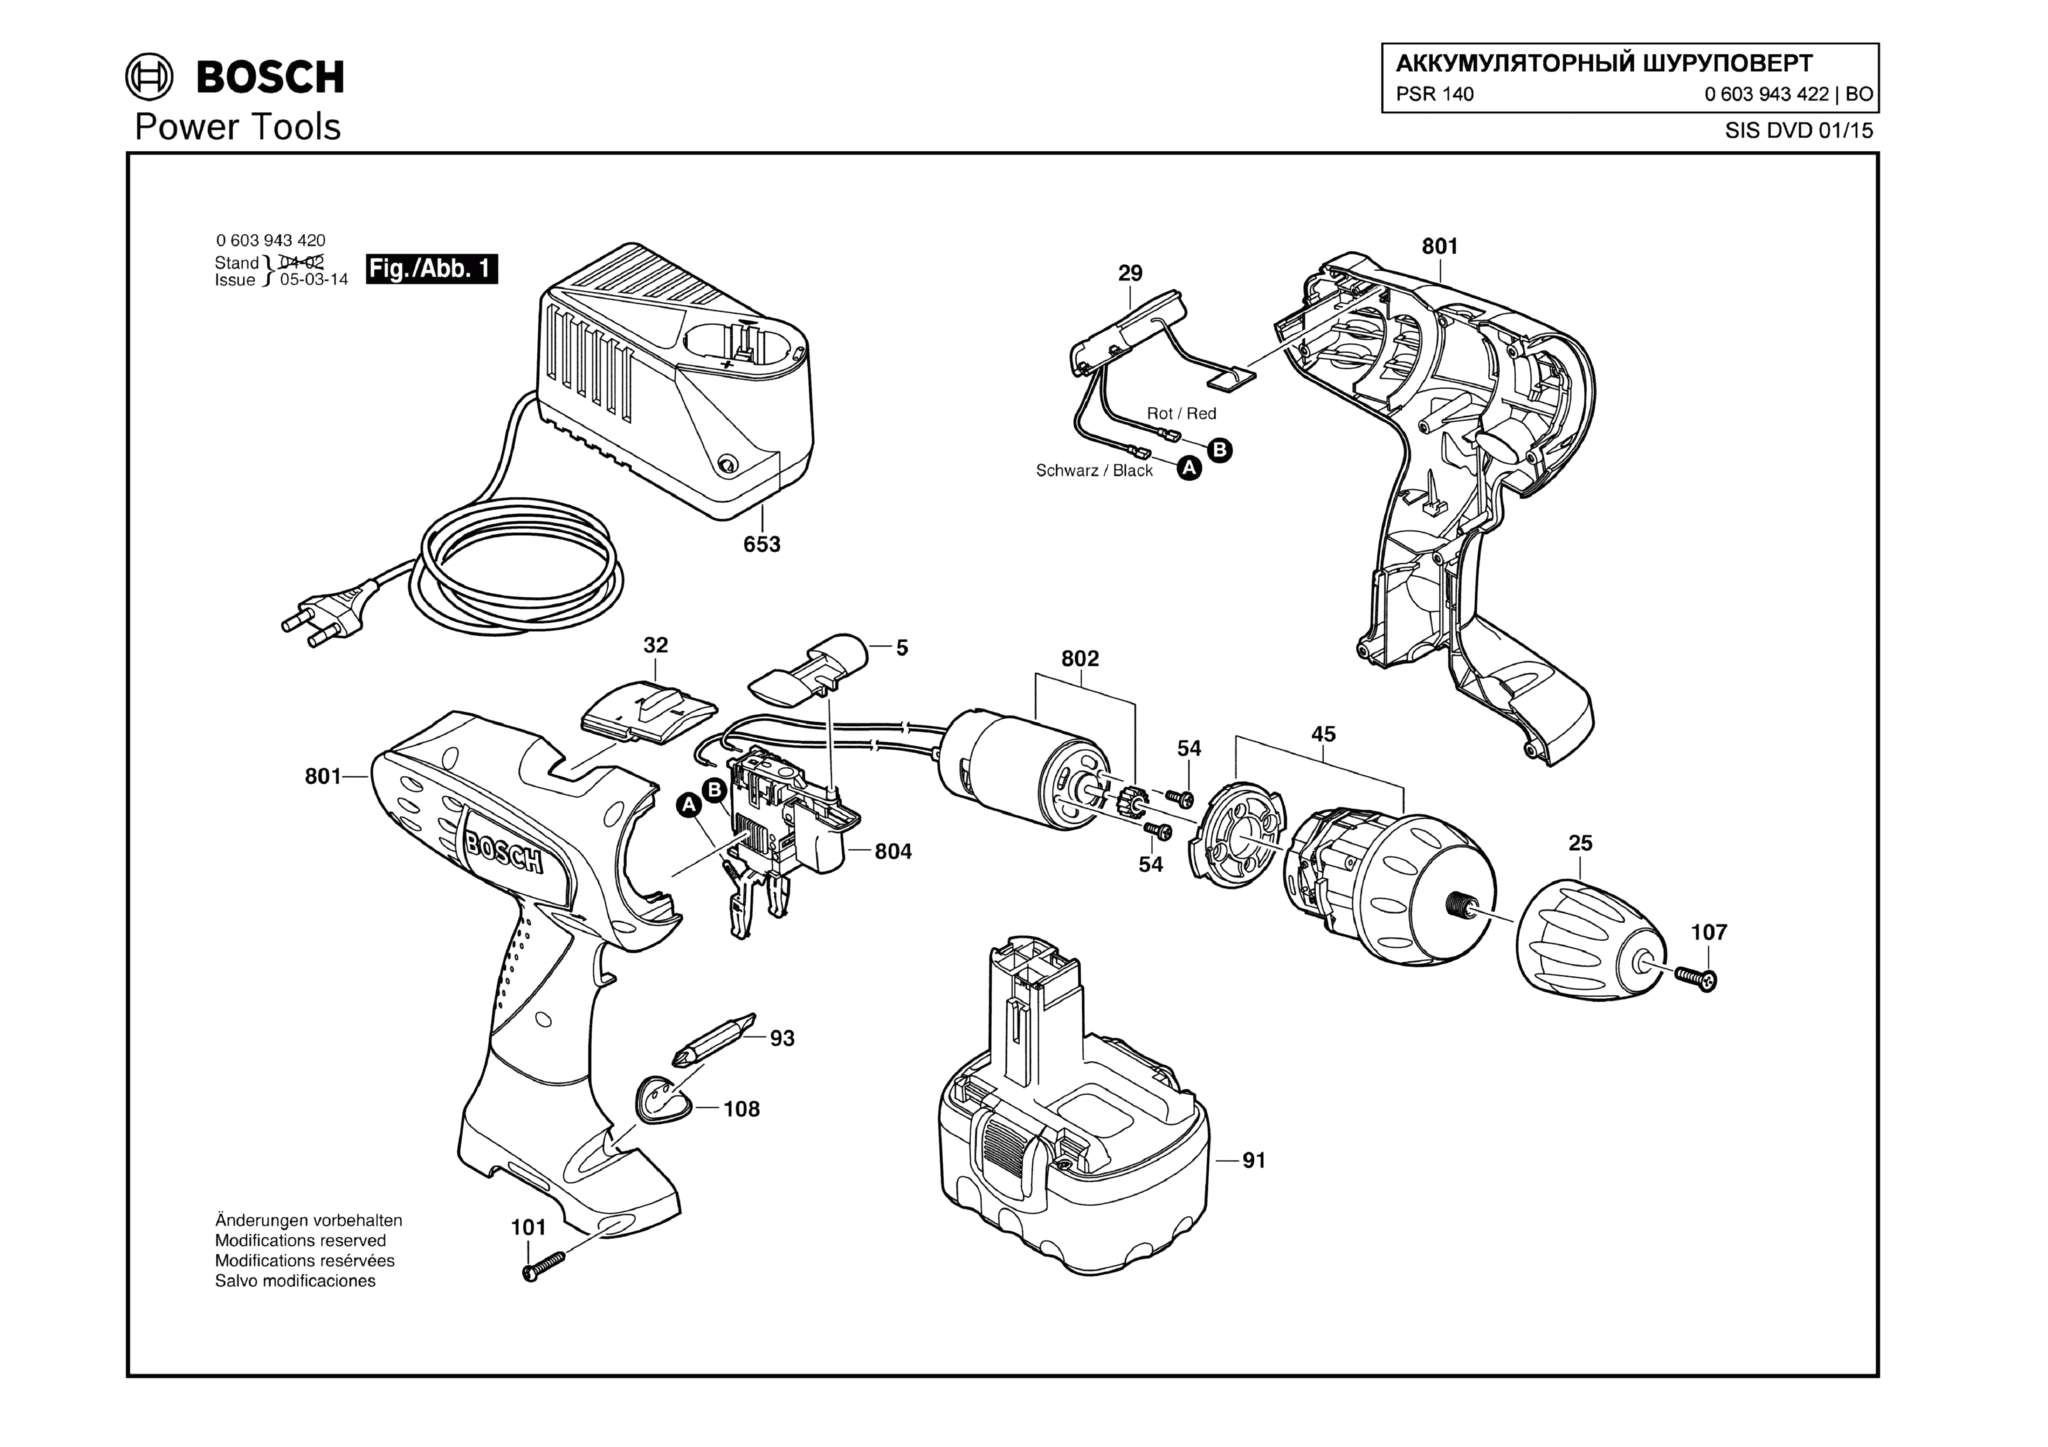 Запчасти, схема и деталировка Bosch PSR 140 (ТИП 0603943422)